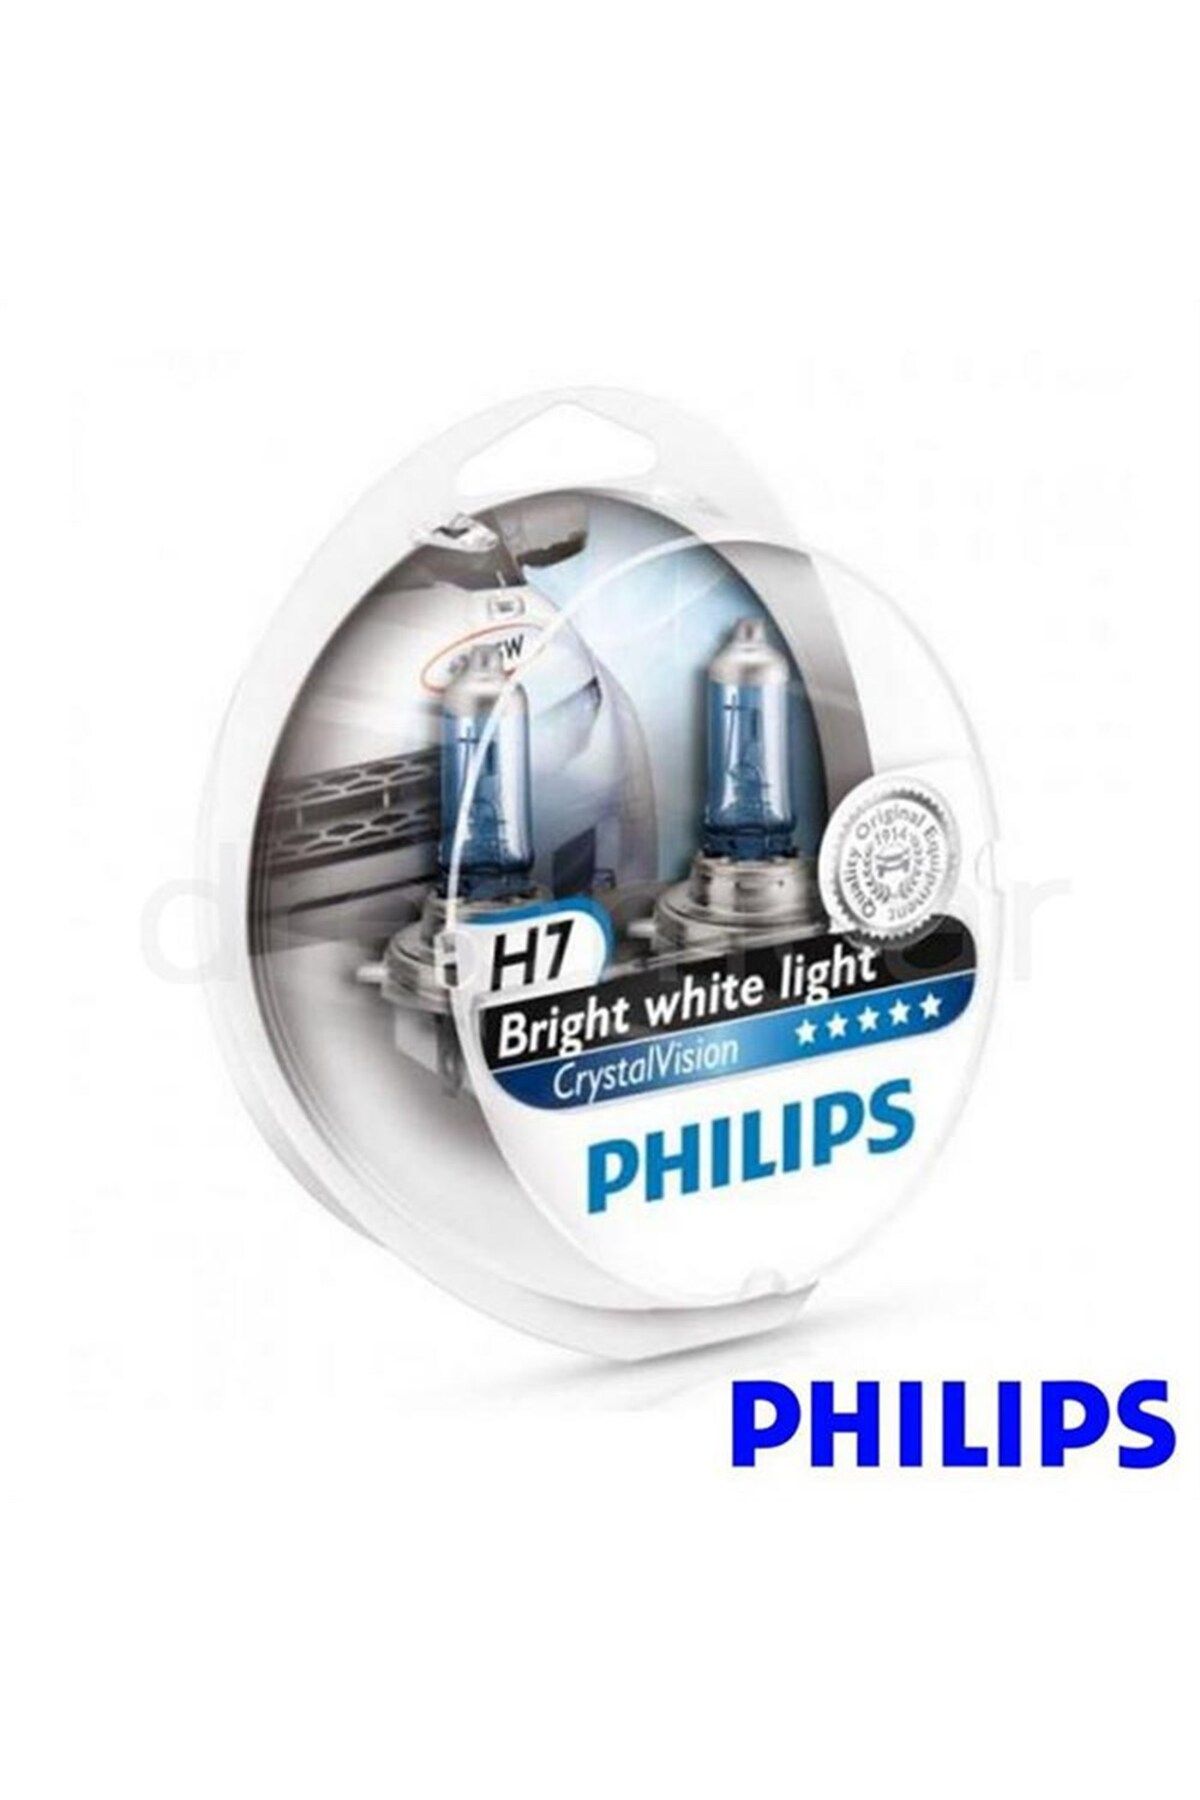 Philips H7 Crystal Vision Parlak Beyaz Işık 4300k Made In Germany